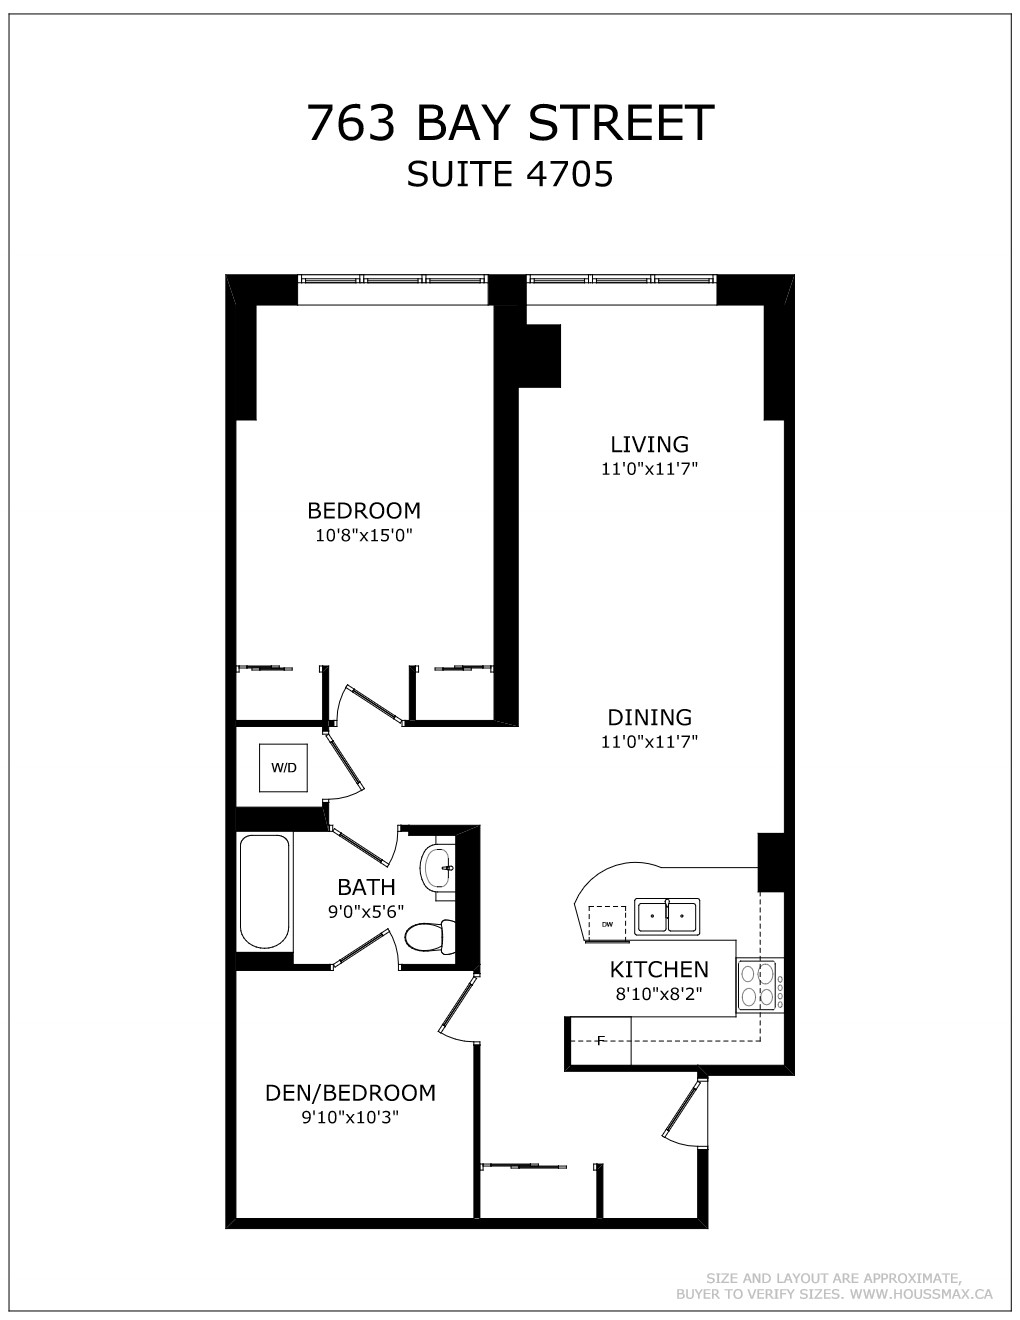 Floor plans for 763 Bay St Unit 4705.